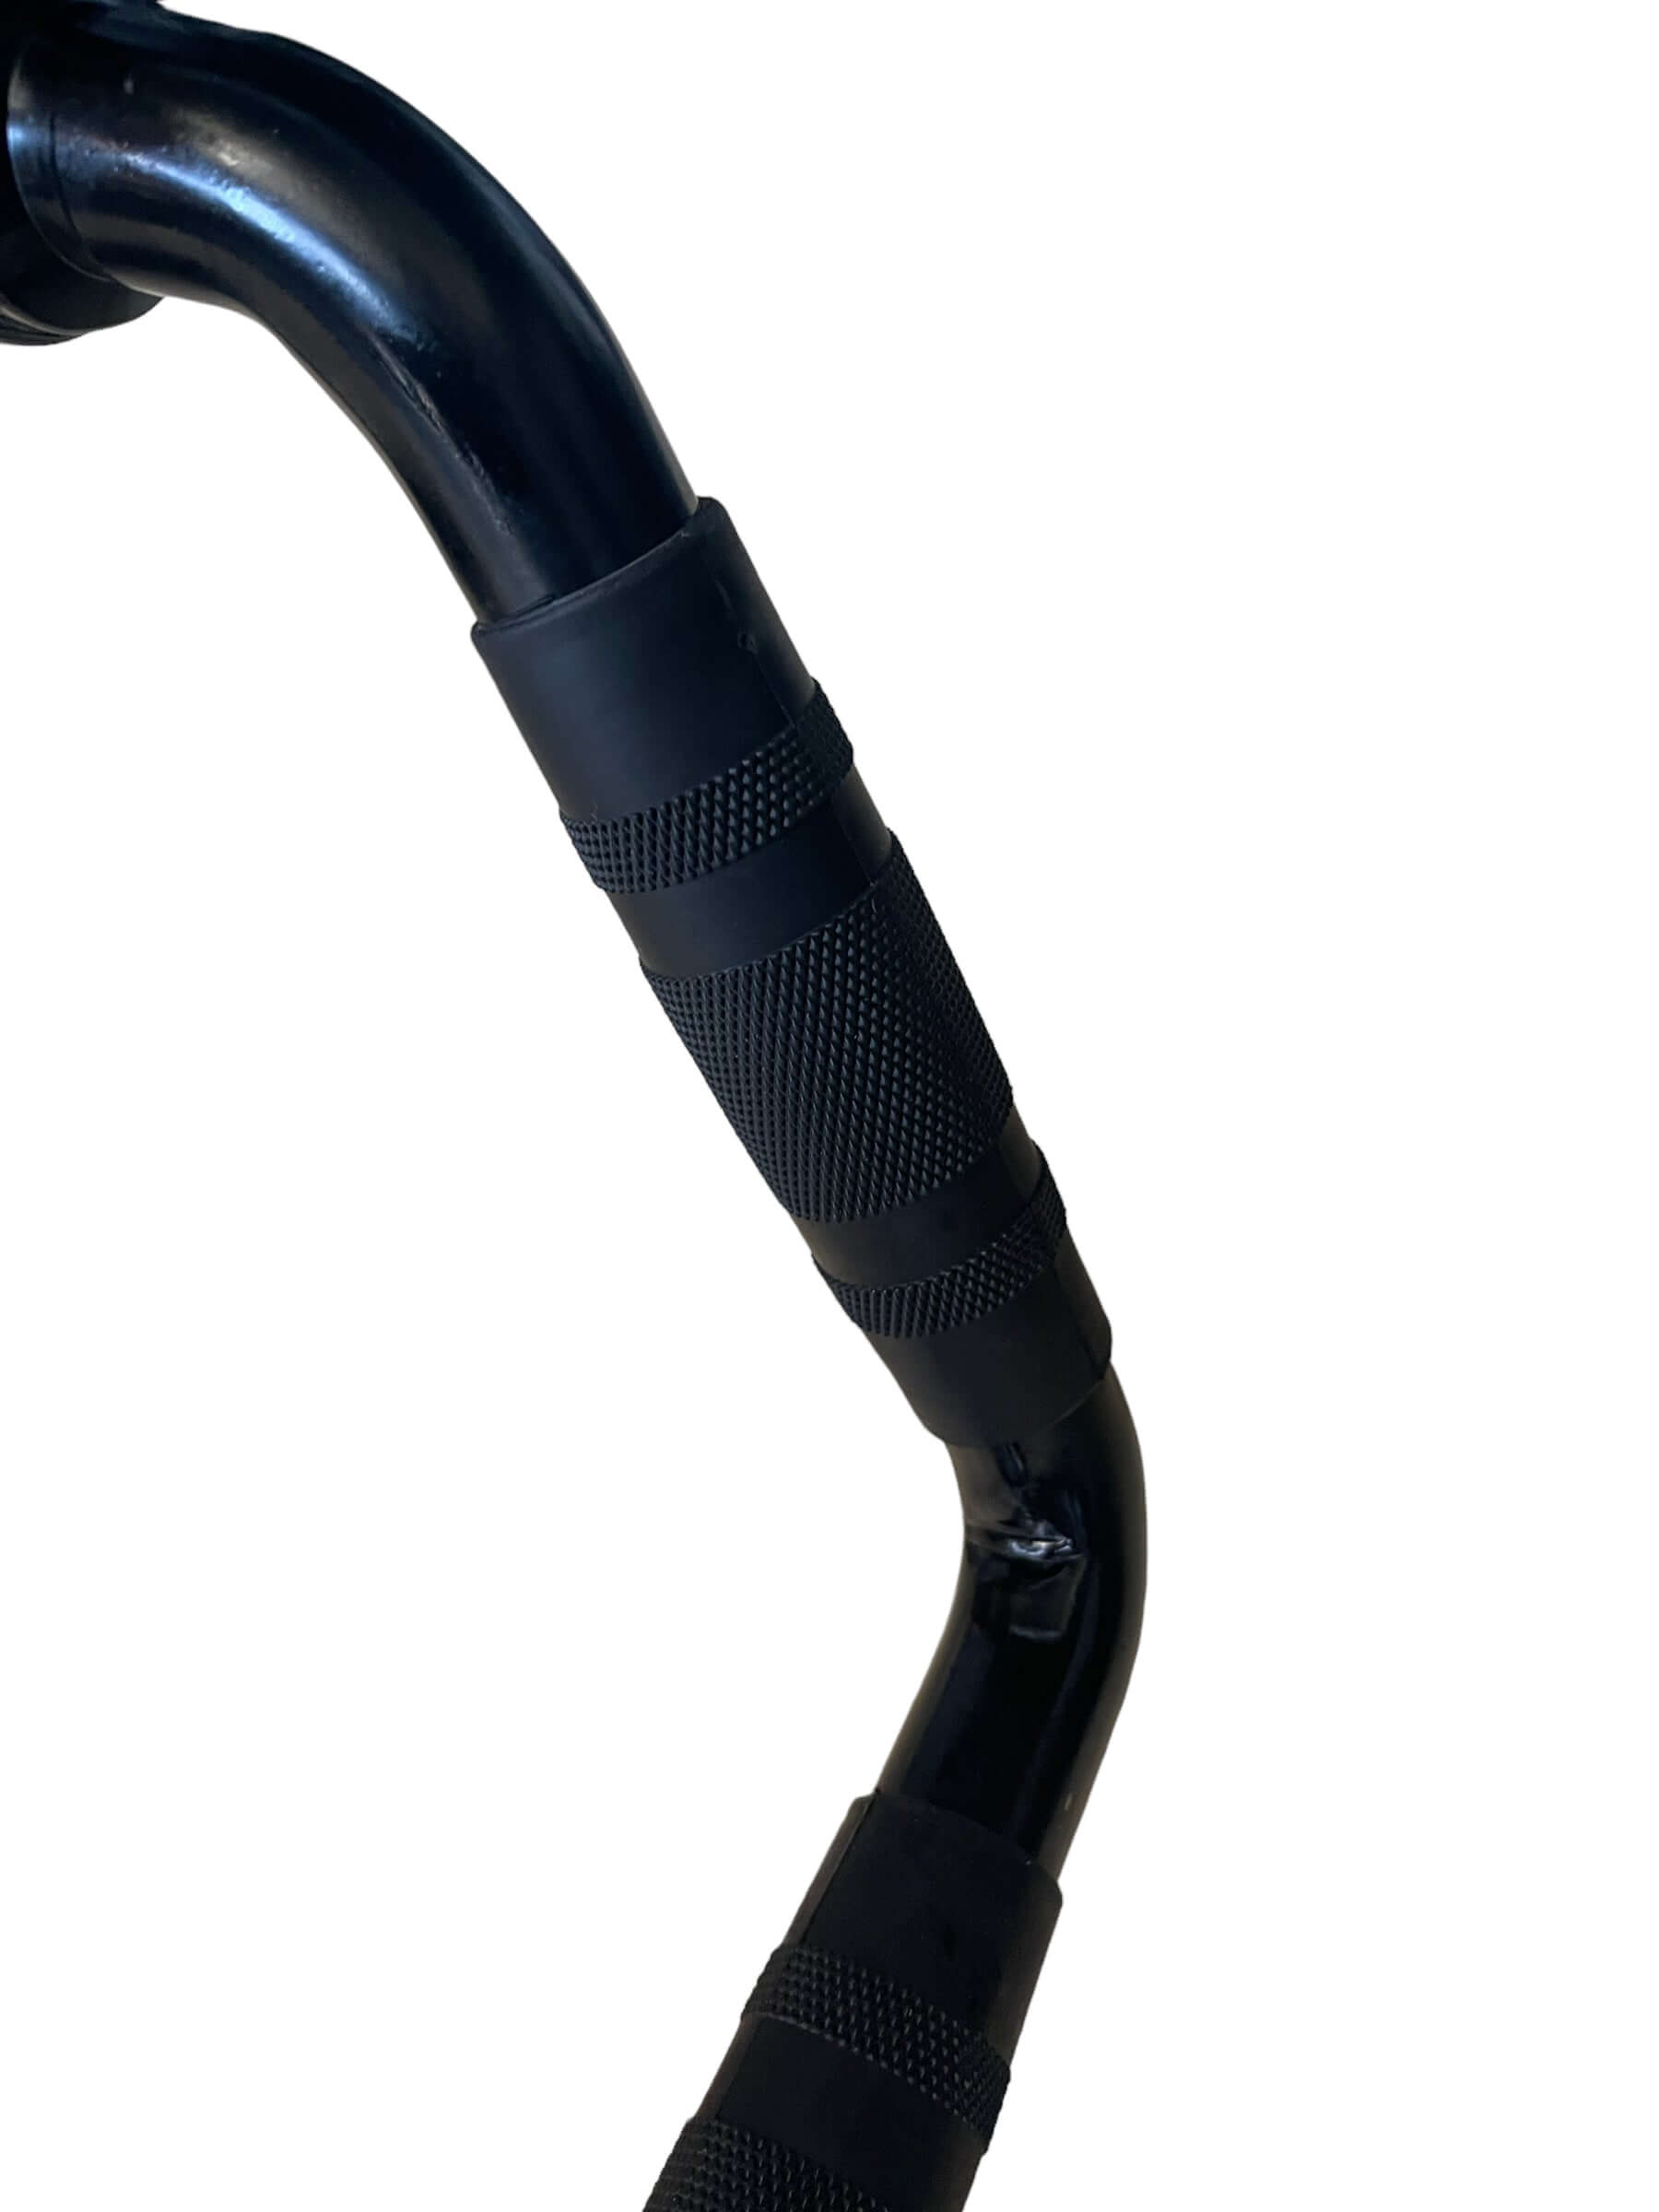 Black Steel Multi Purpose Gym Cable Attachment | INSOURCE